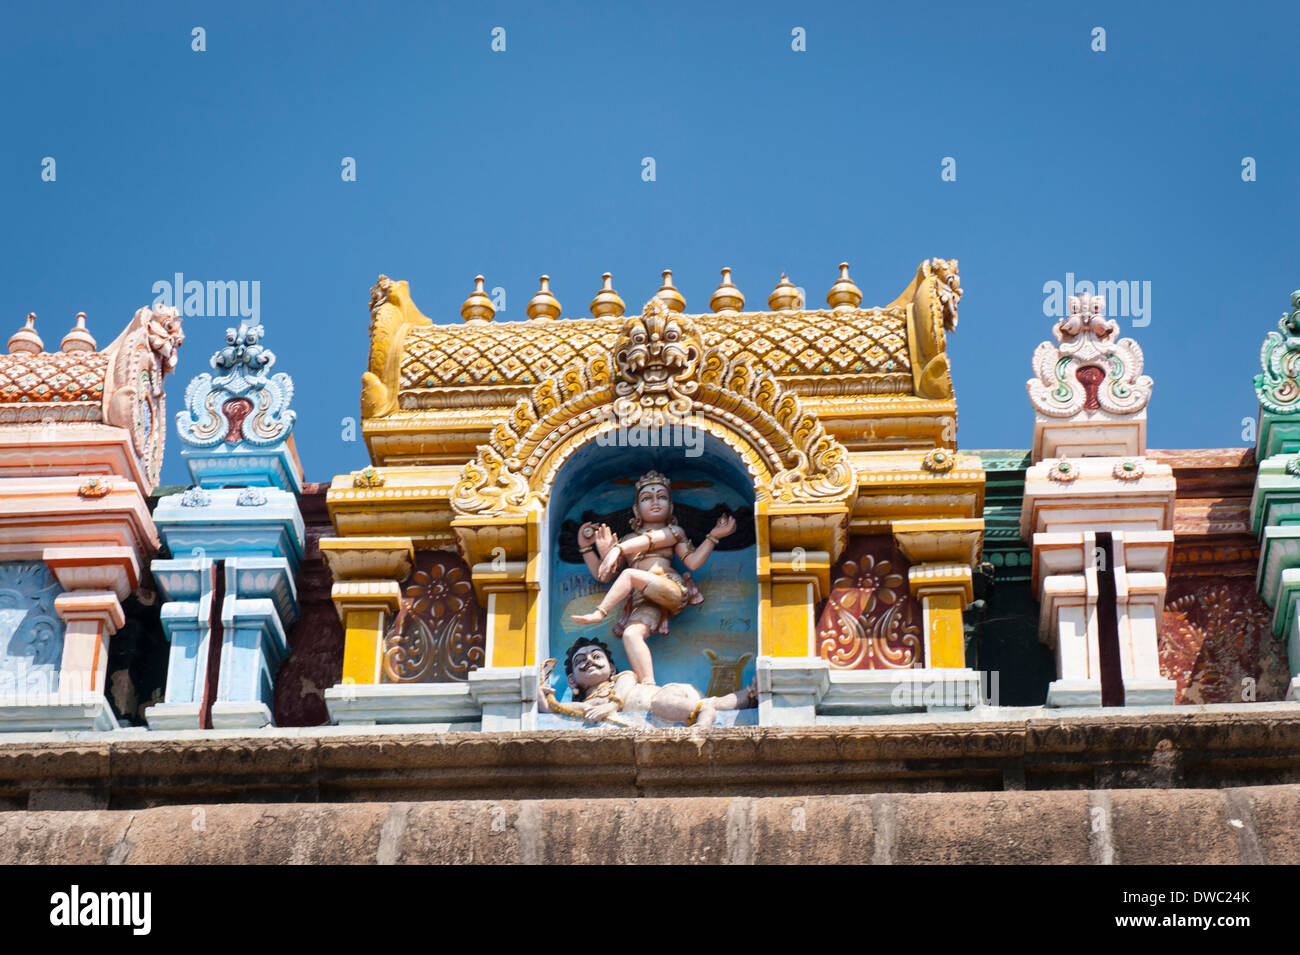 Indien Tamil Nadu Kanchipuram Sri Ekambaranathar Ekambareswarar Tempel Tempel Shiva Hindu 6. Jahrhundert Dach detail Stuckfiguren blauer Himmel Statuen Stockfoto